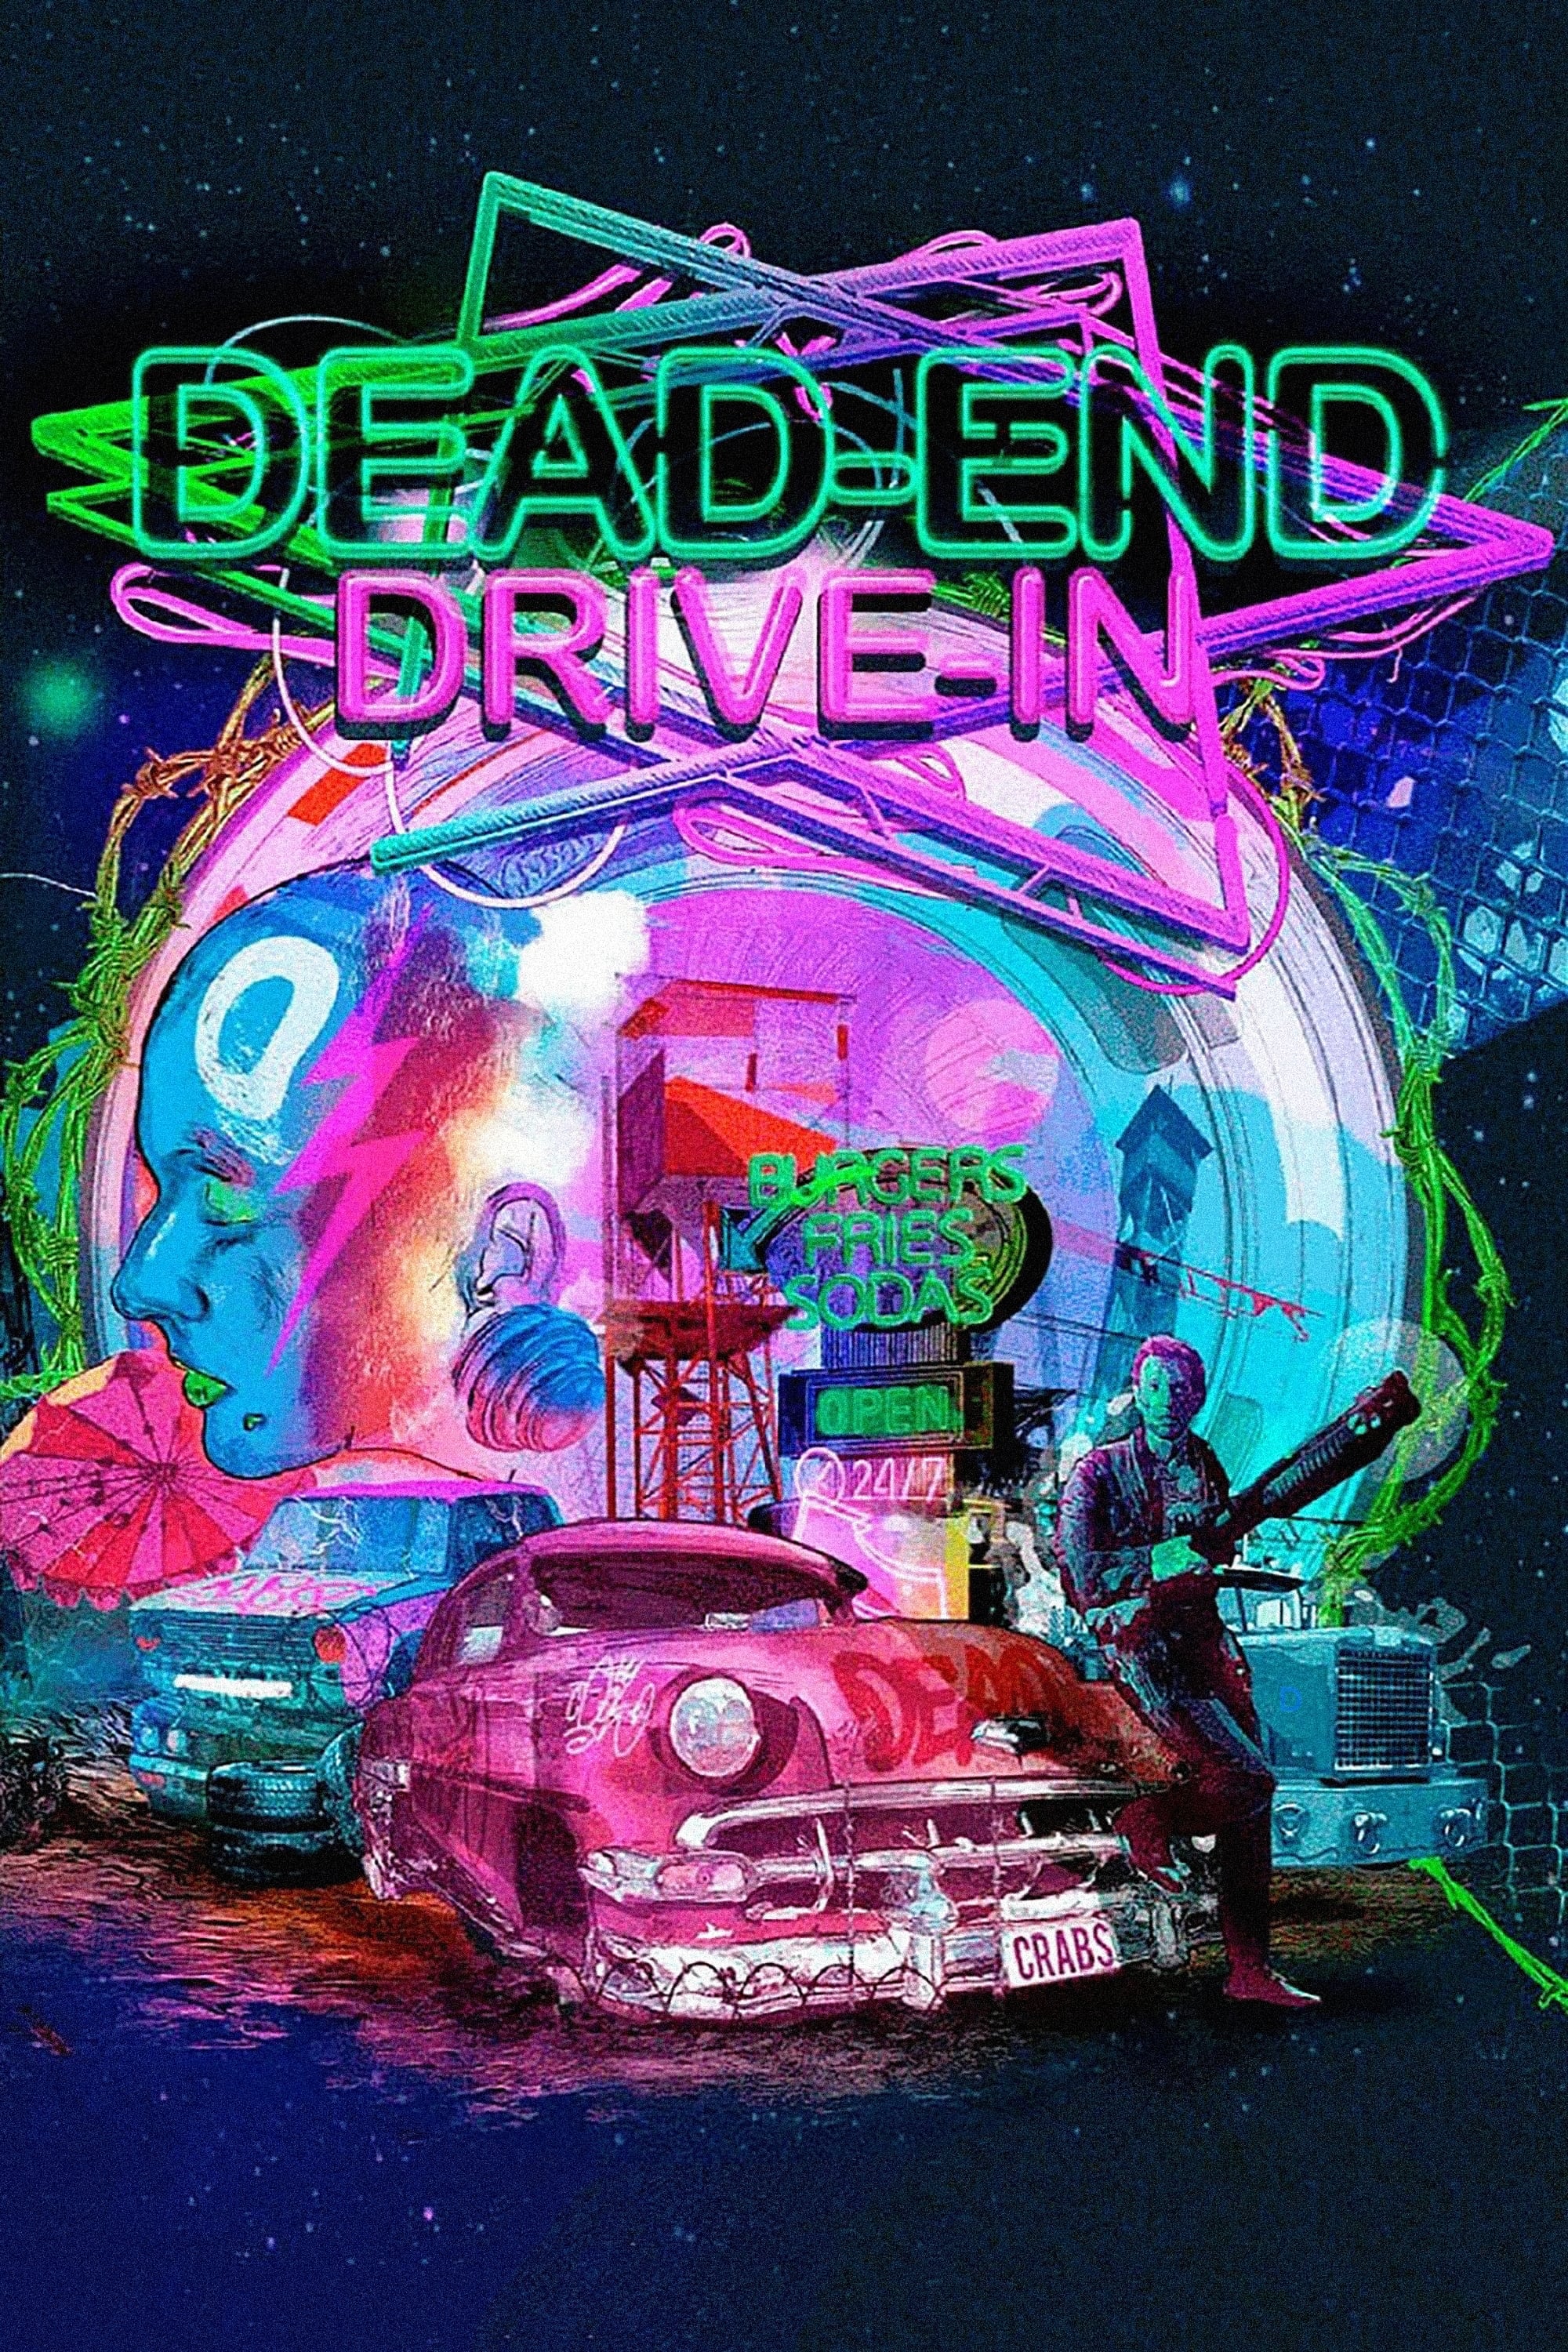 Dead End Drive-In (1986)